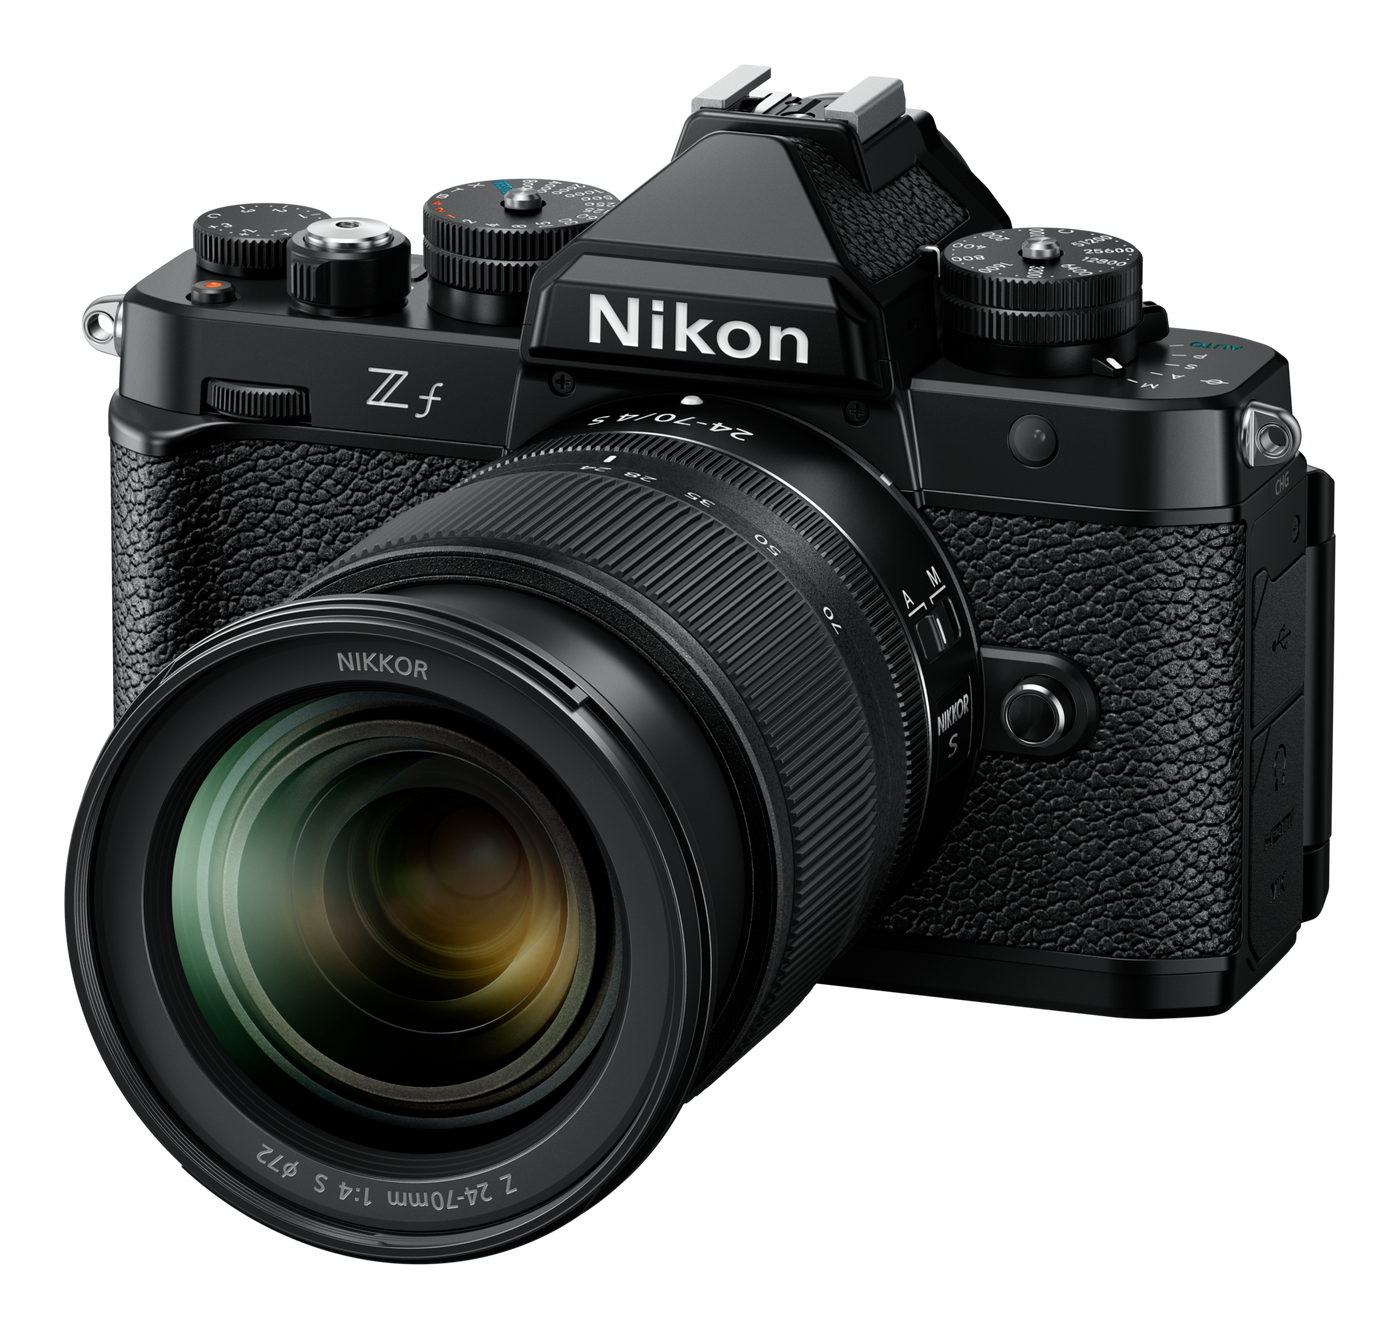 Nikon Z f bundle angebot, Nikon Z f mit Objektiv, im Kit, 